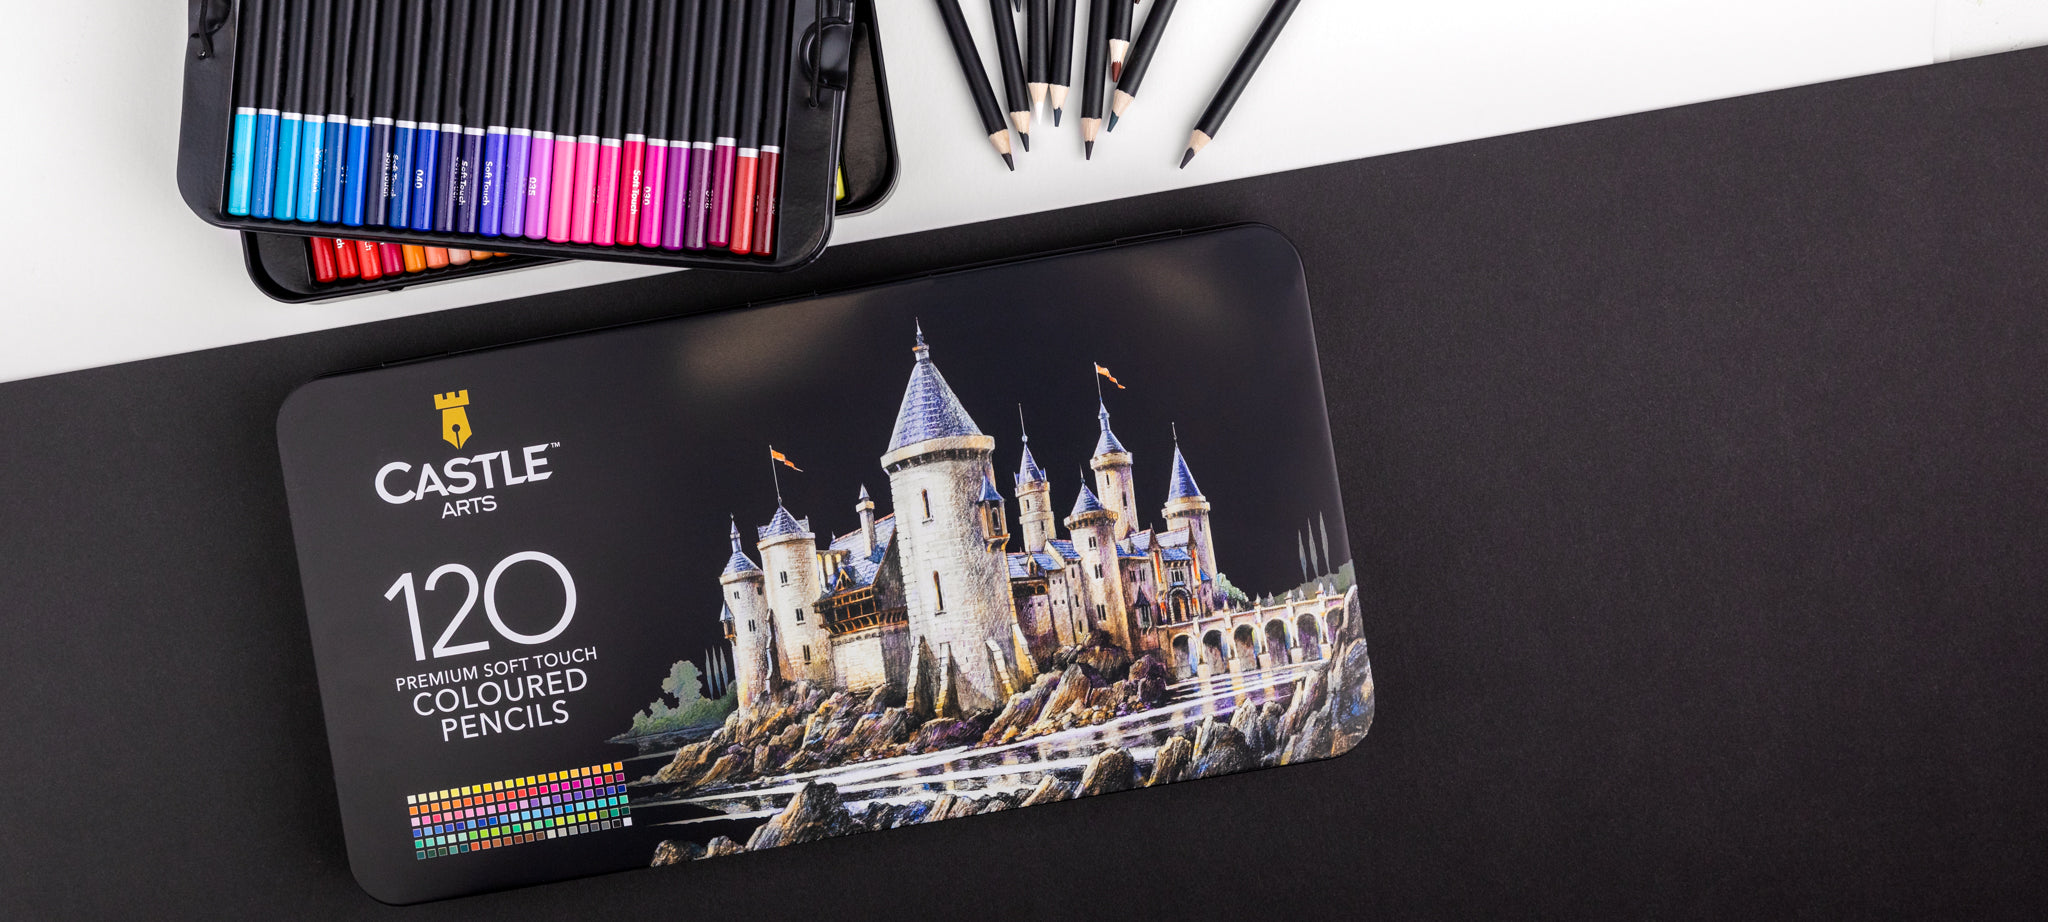 Castle Arts - Created by @erjonossmanaj using our colored pencils